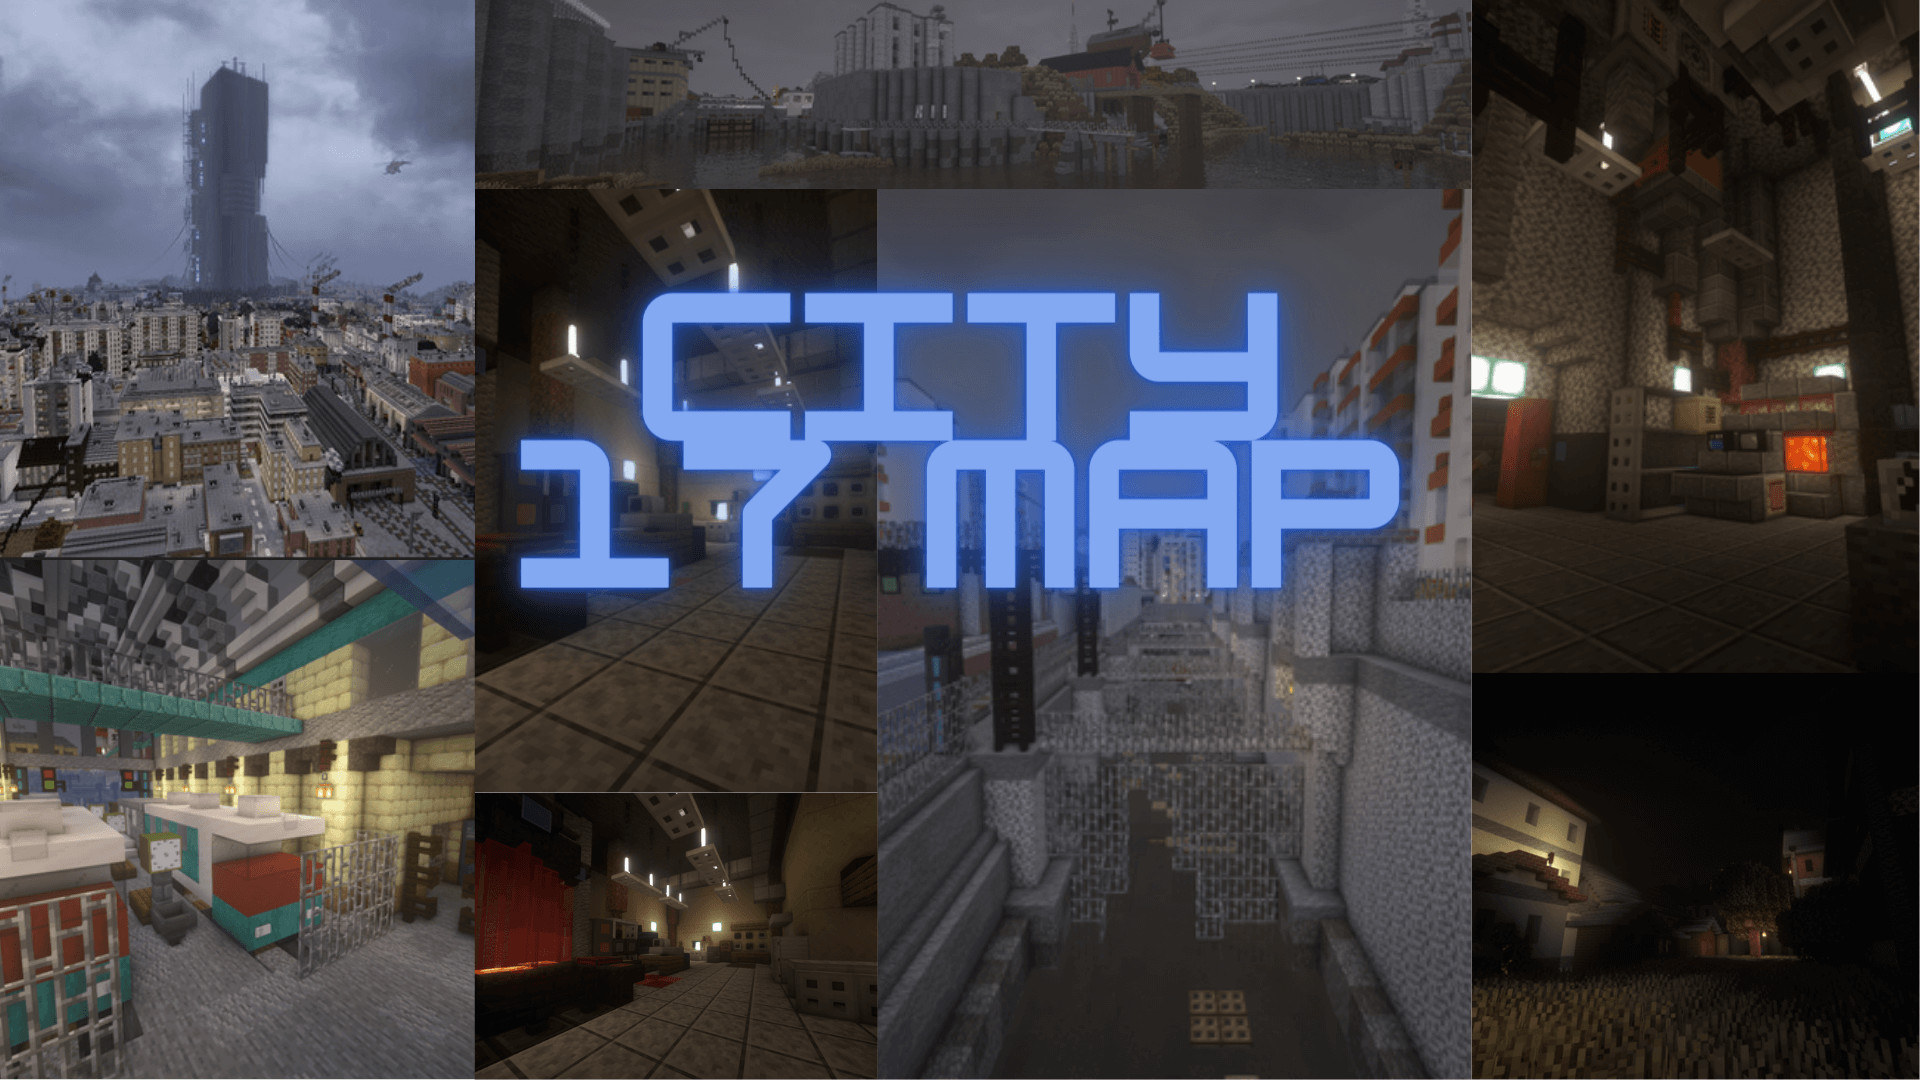 City 17 Map